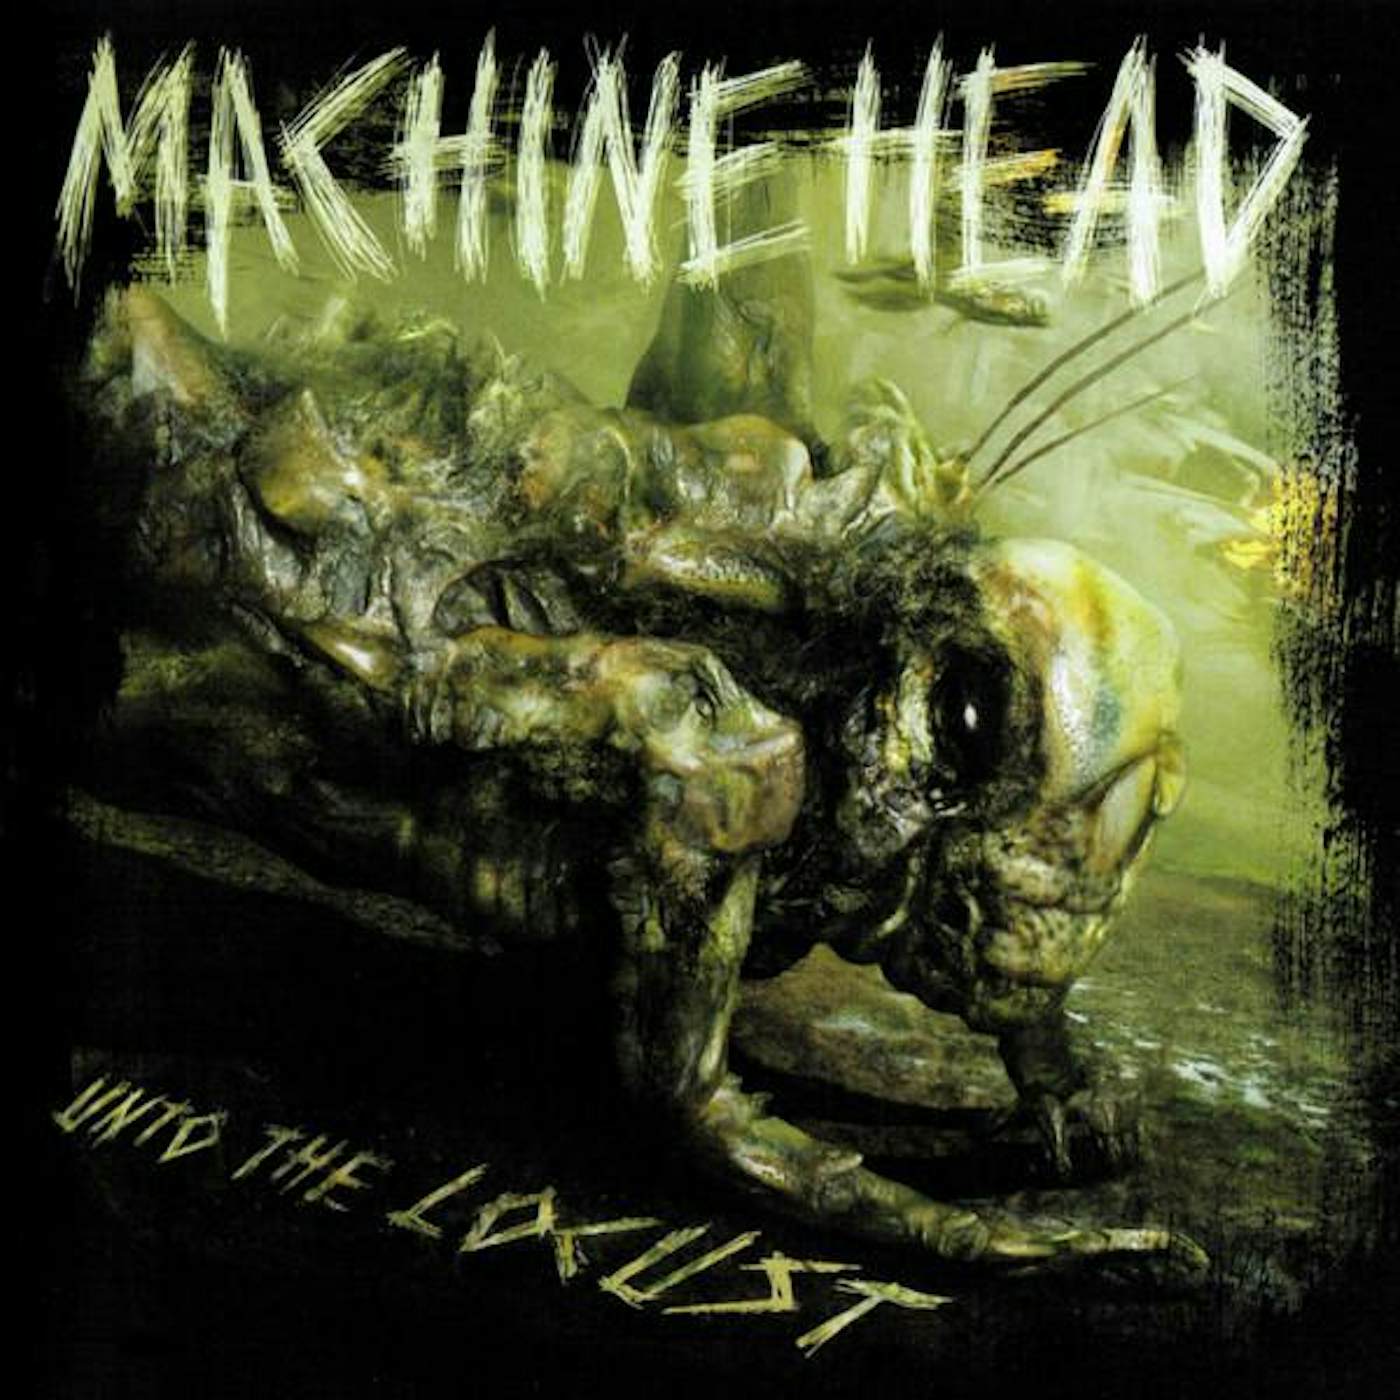 Machine Head UNTO THE LOCUST CD